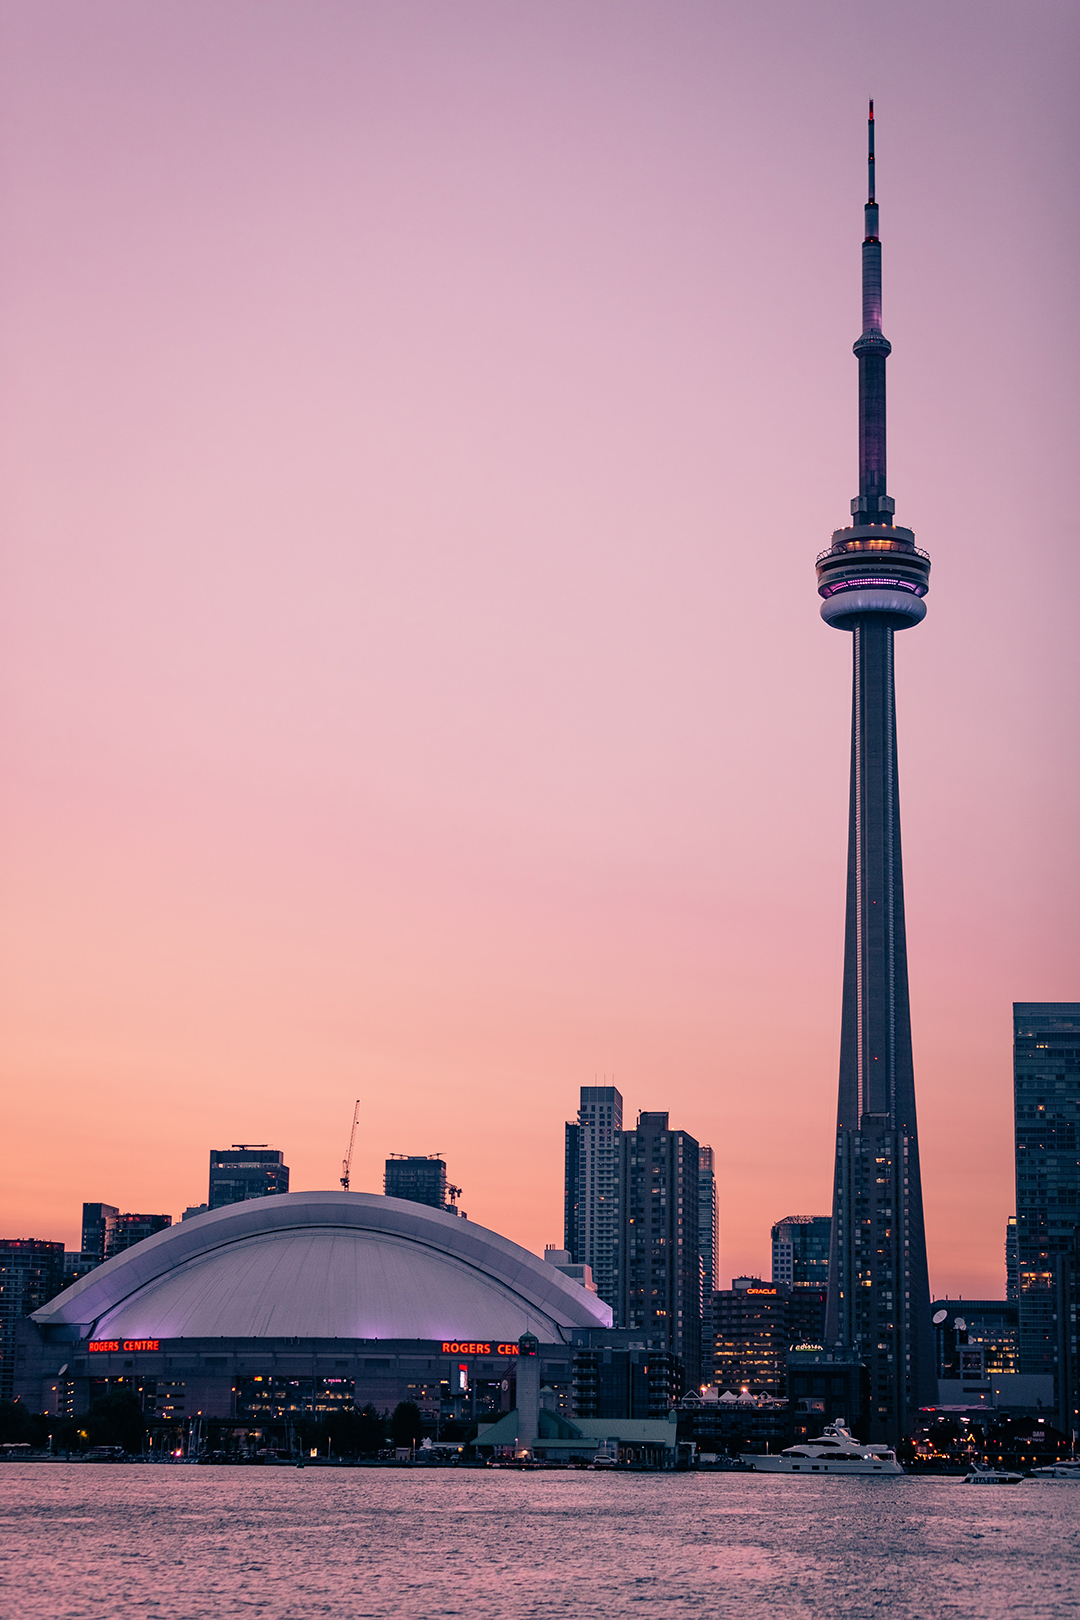 02_Kaj_poceti_v_Torontu_-_Things_to_do_in_Toronto_-_CN_Tower_Photo_by_Tandem_X_Visuals_on_Unsplash.jpg